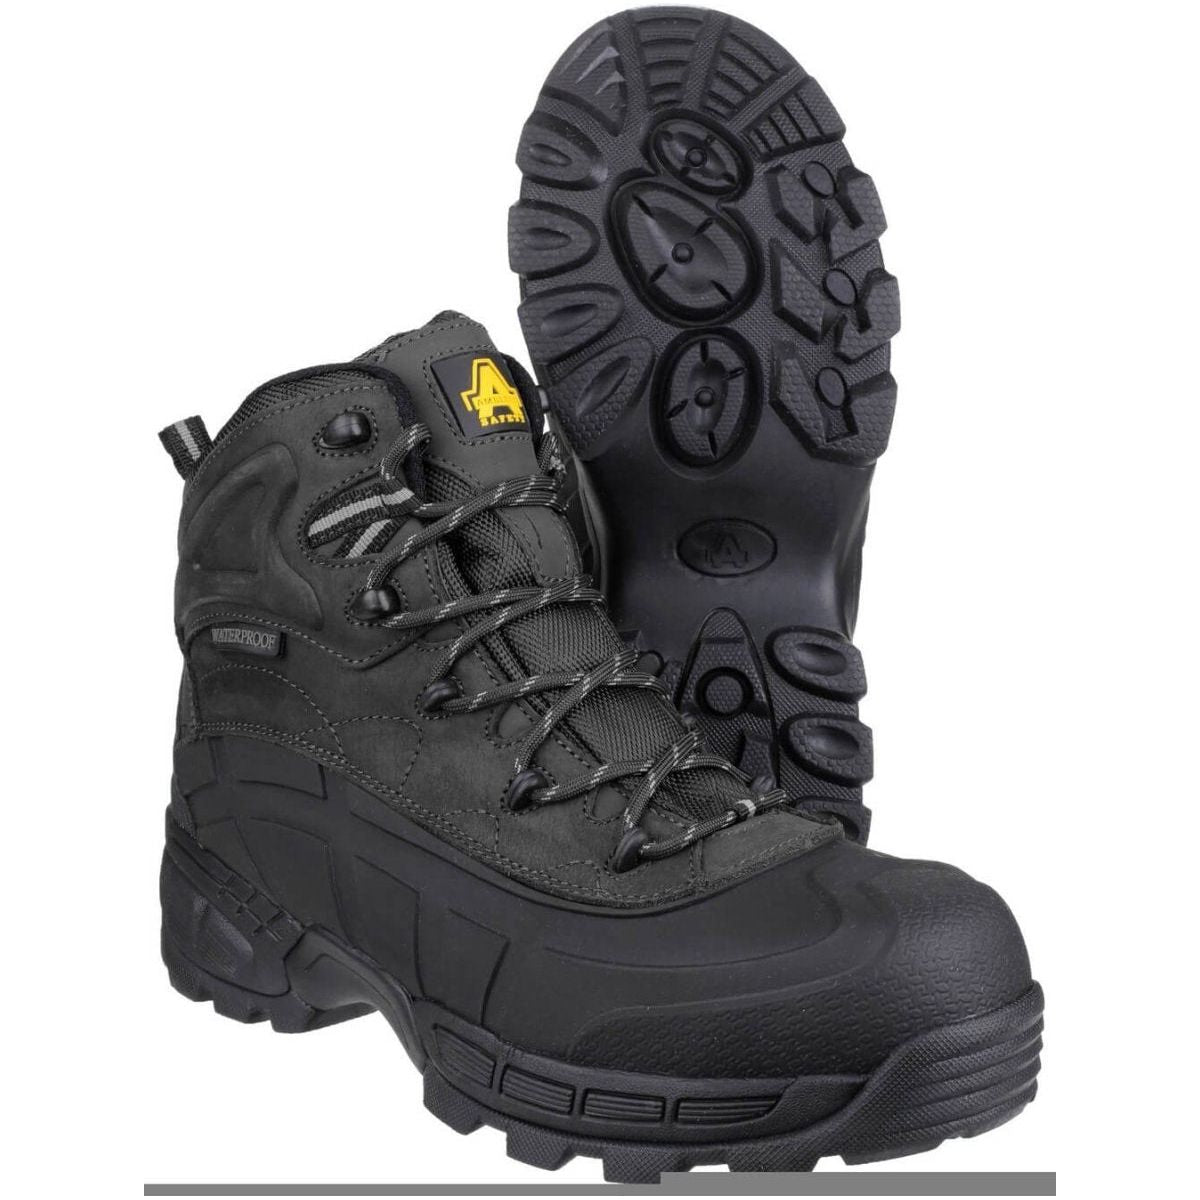 Amblers Fs430 Hybrid Safety Boots Mens - workweargurus.com